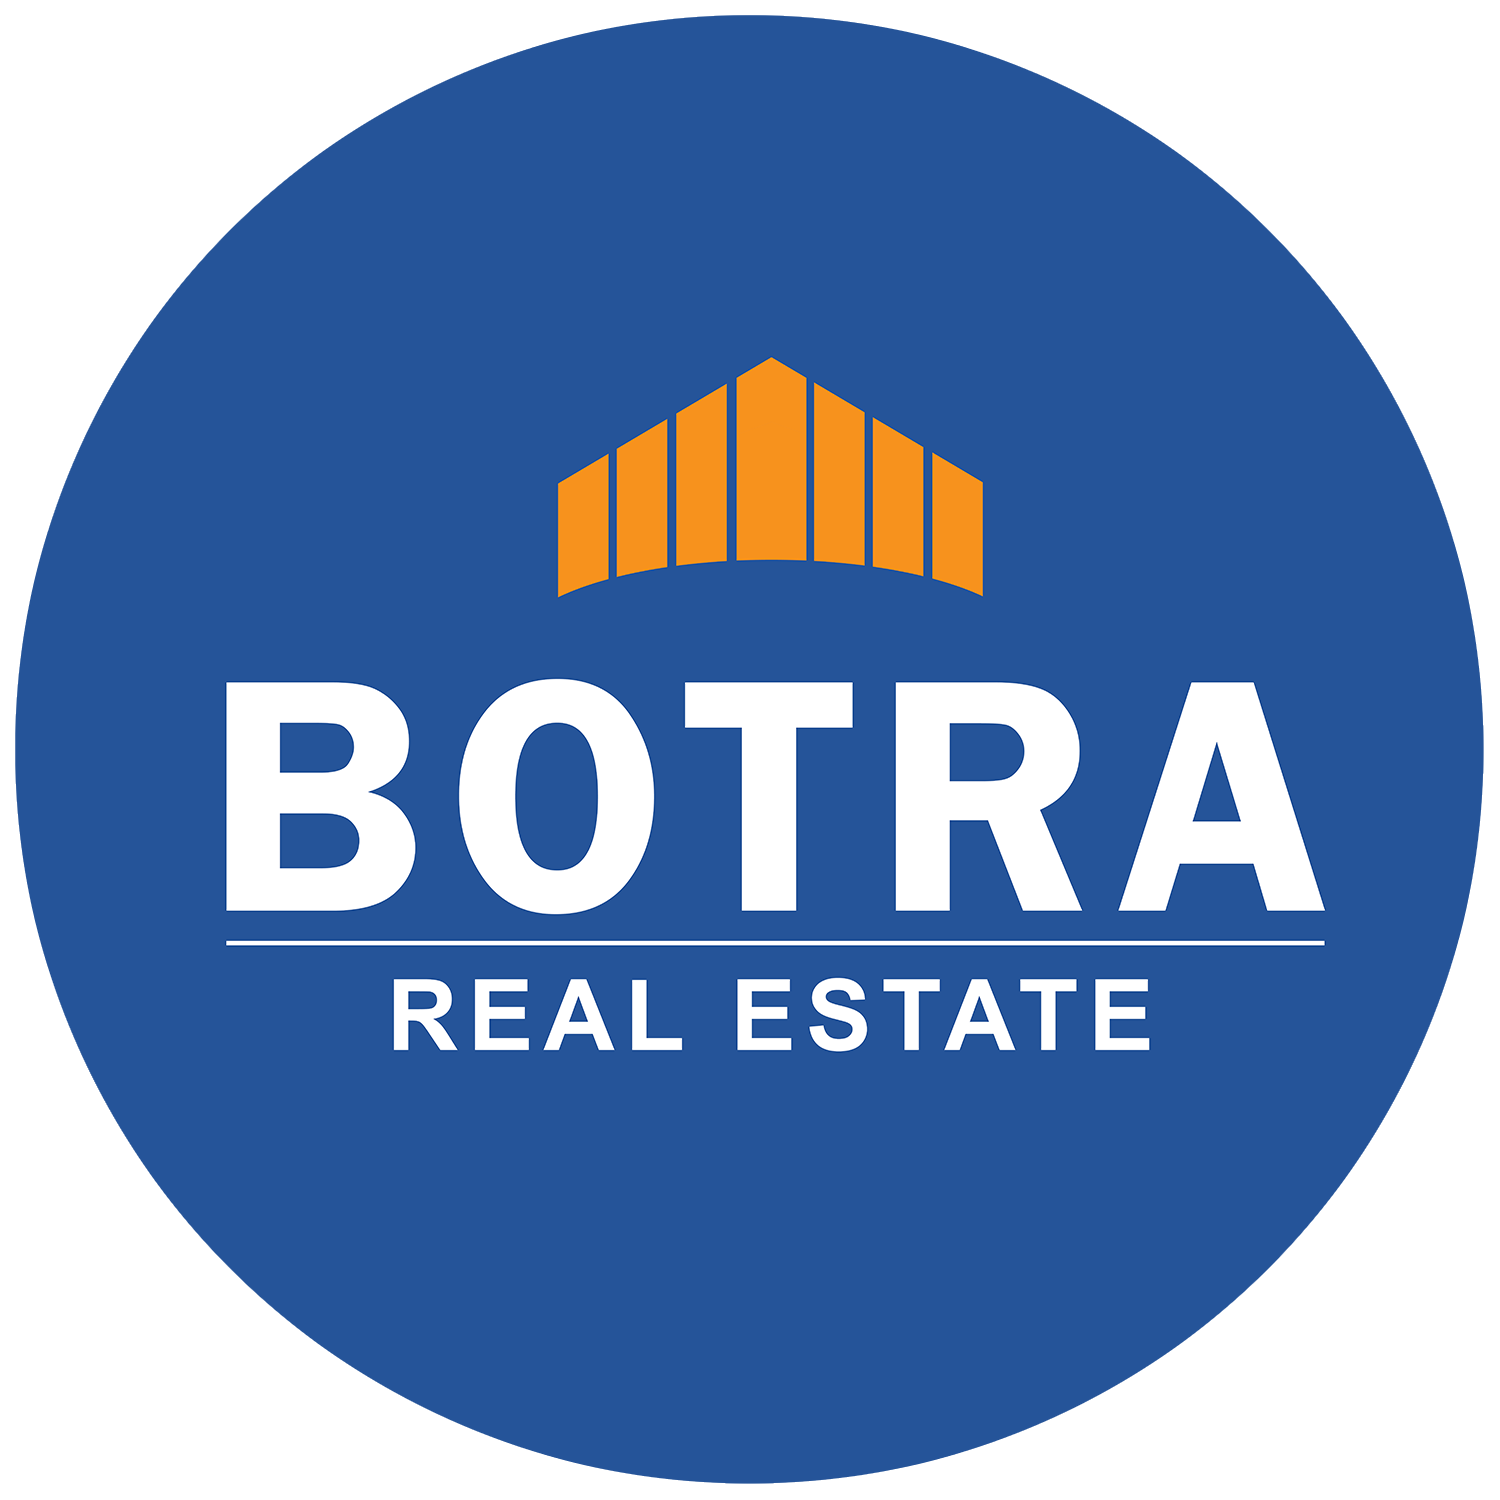 Botra Real estate